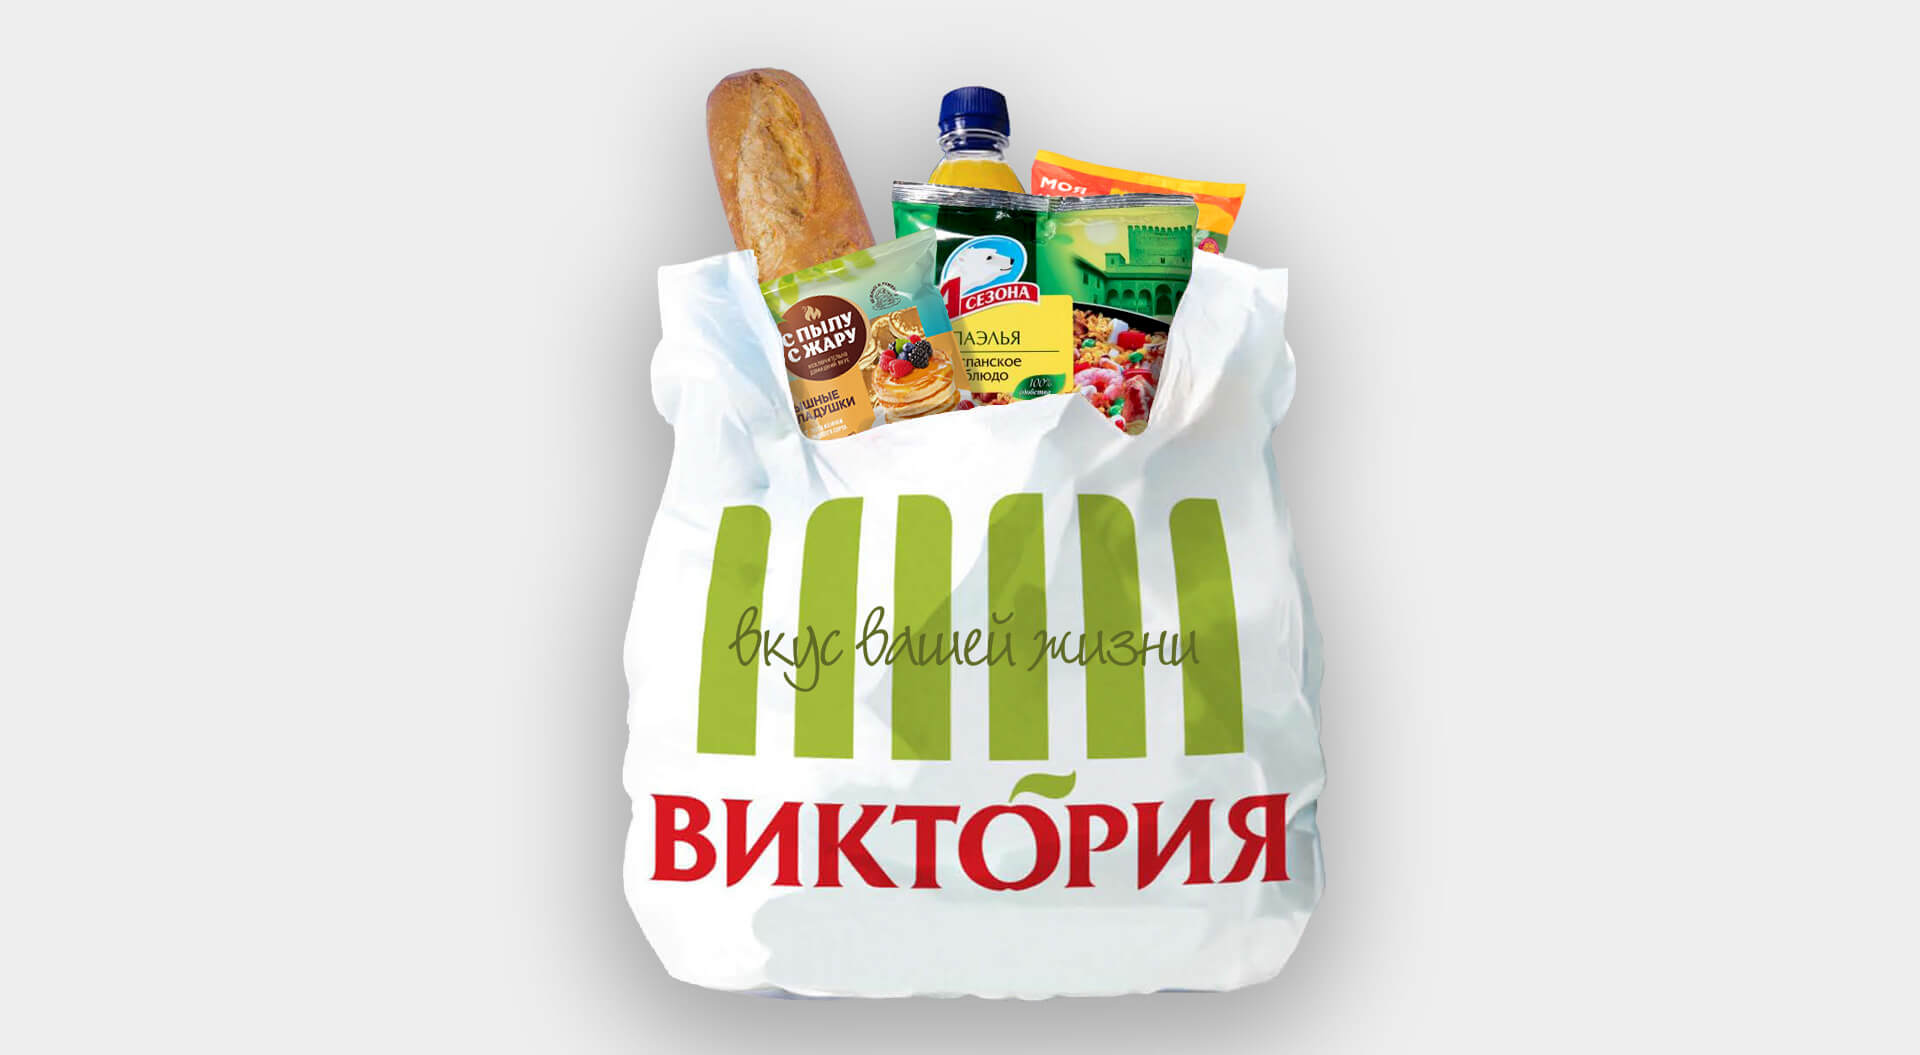 Victoria supermarket brand identity and shopping bag design